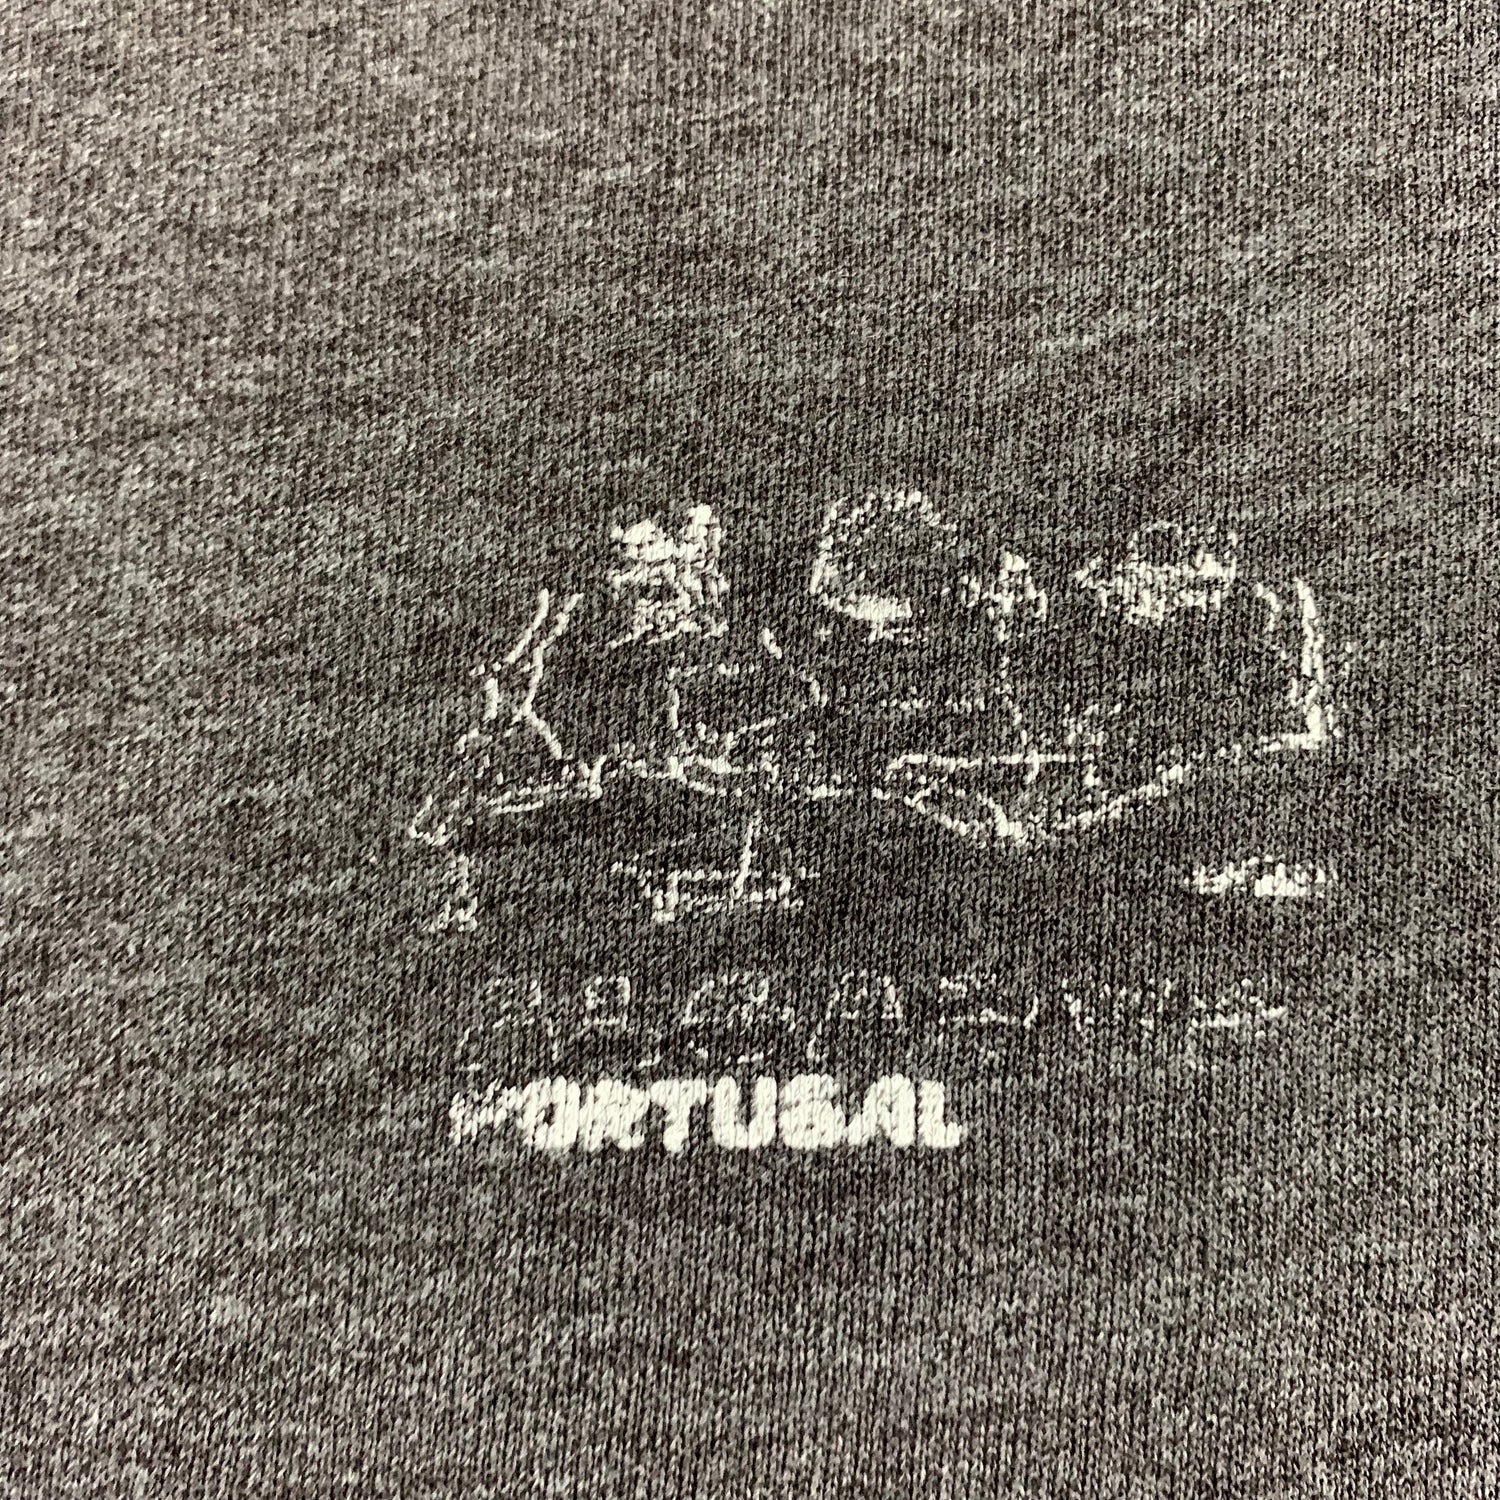 Vintage 1980s Portugal Sweatshirt size Large